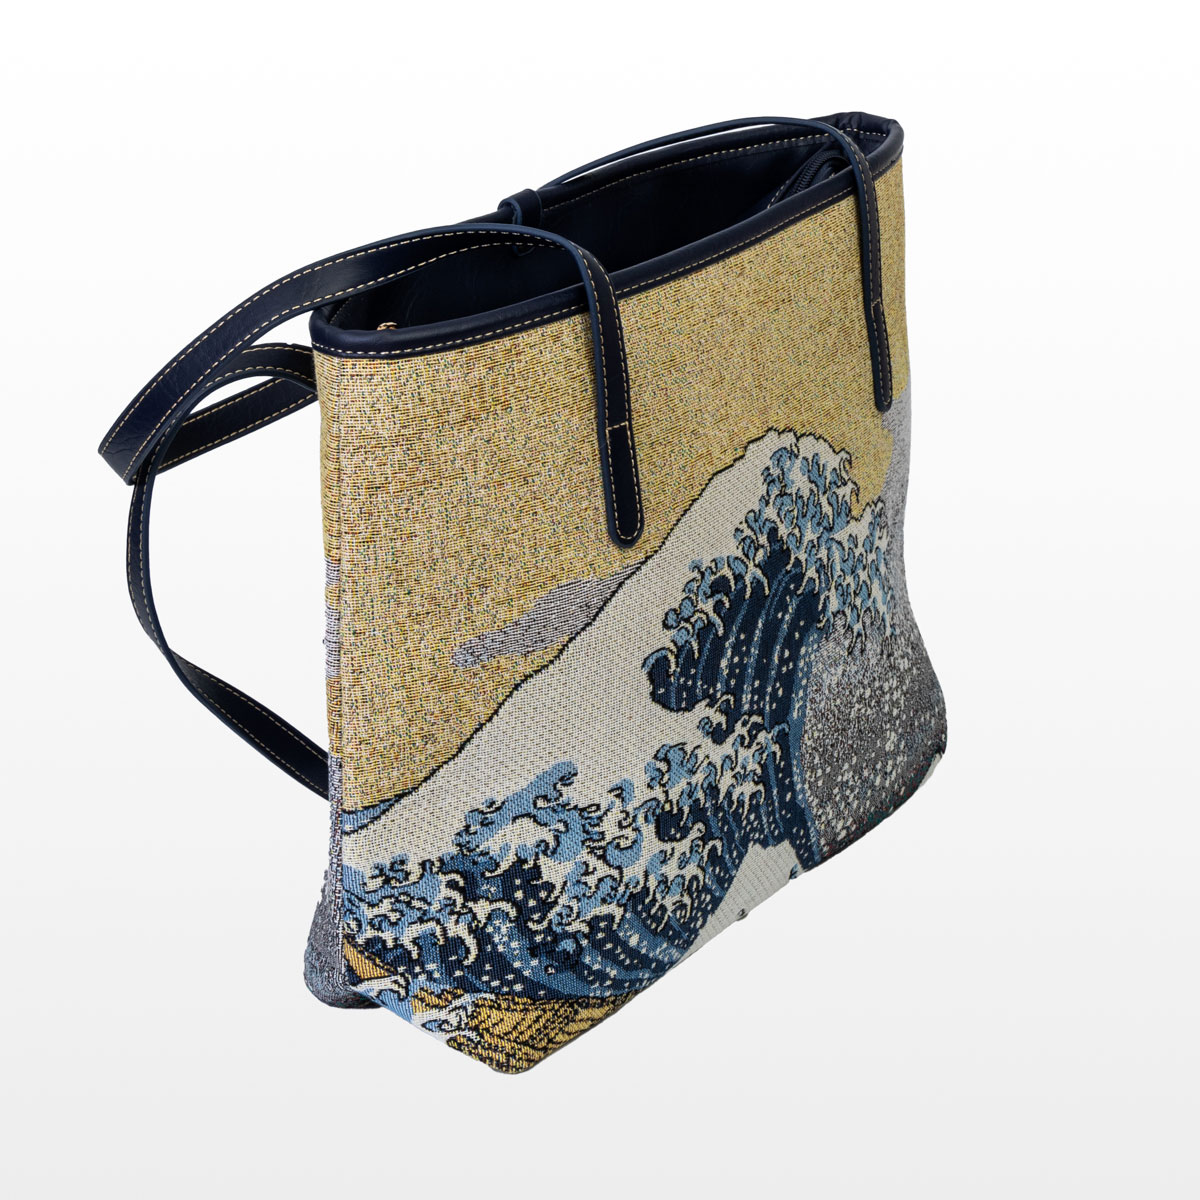 Hokusai handbag - The Great Wave of Kanagawa (detail n°2)